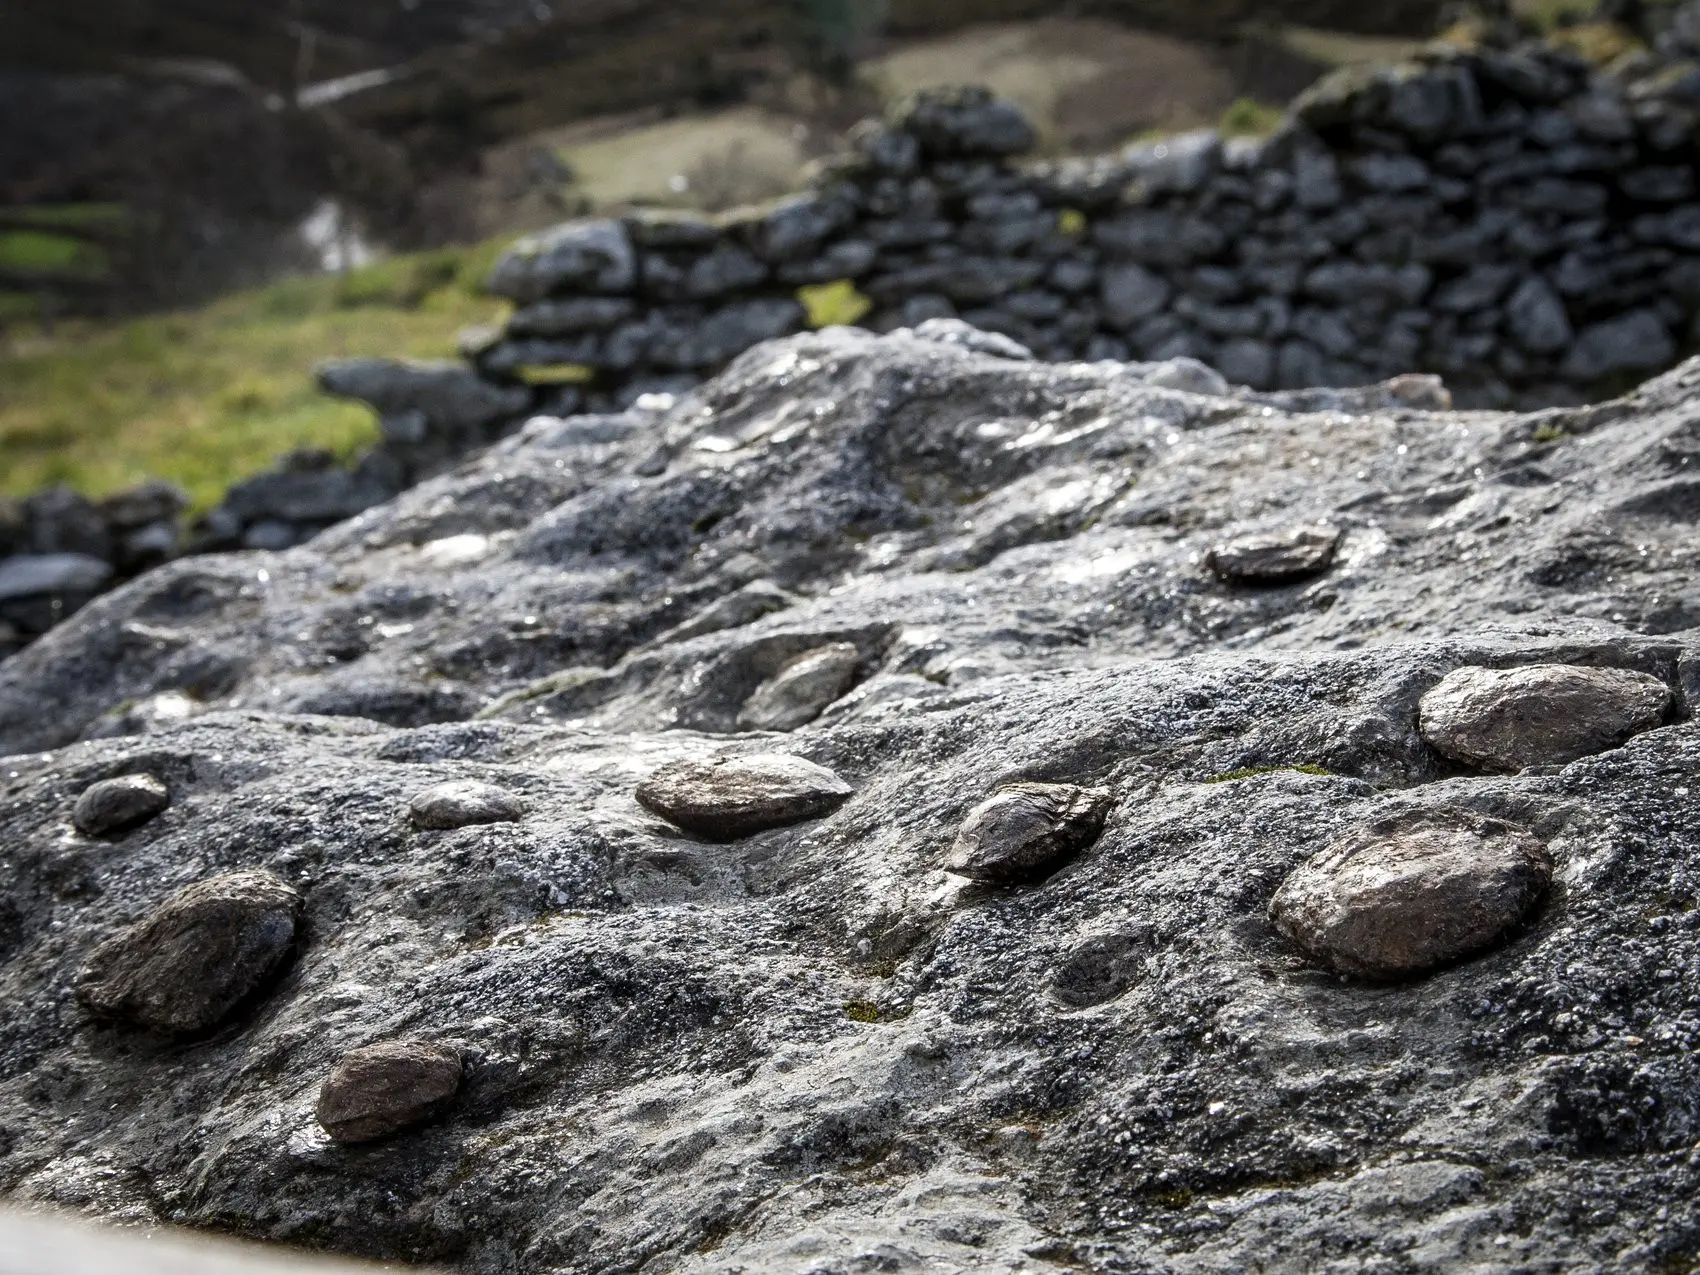 Fenomena Pedras Parideiras atau batu melahirkan di Portugal. (Arouca Geopark)